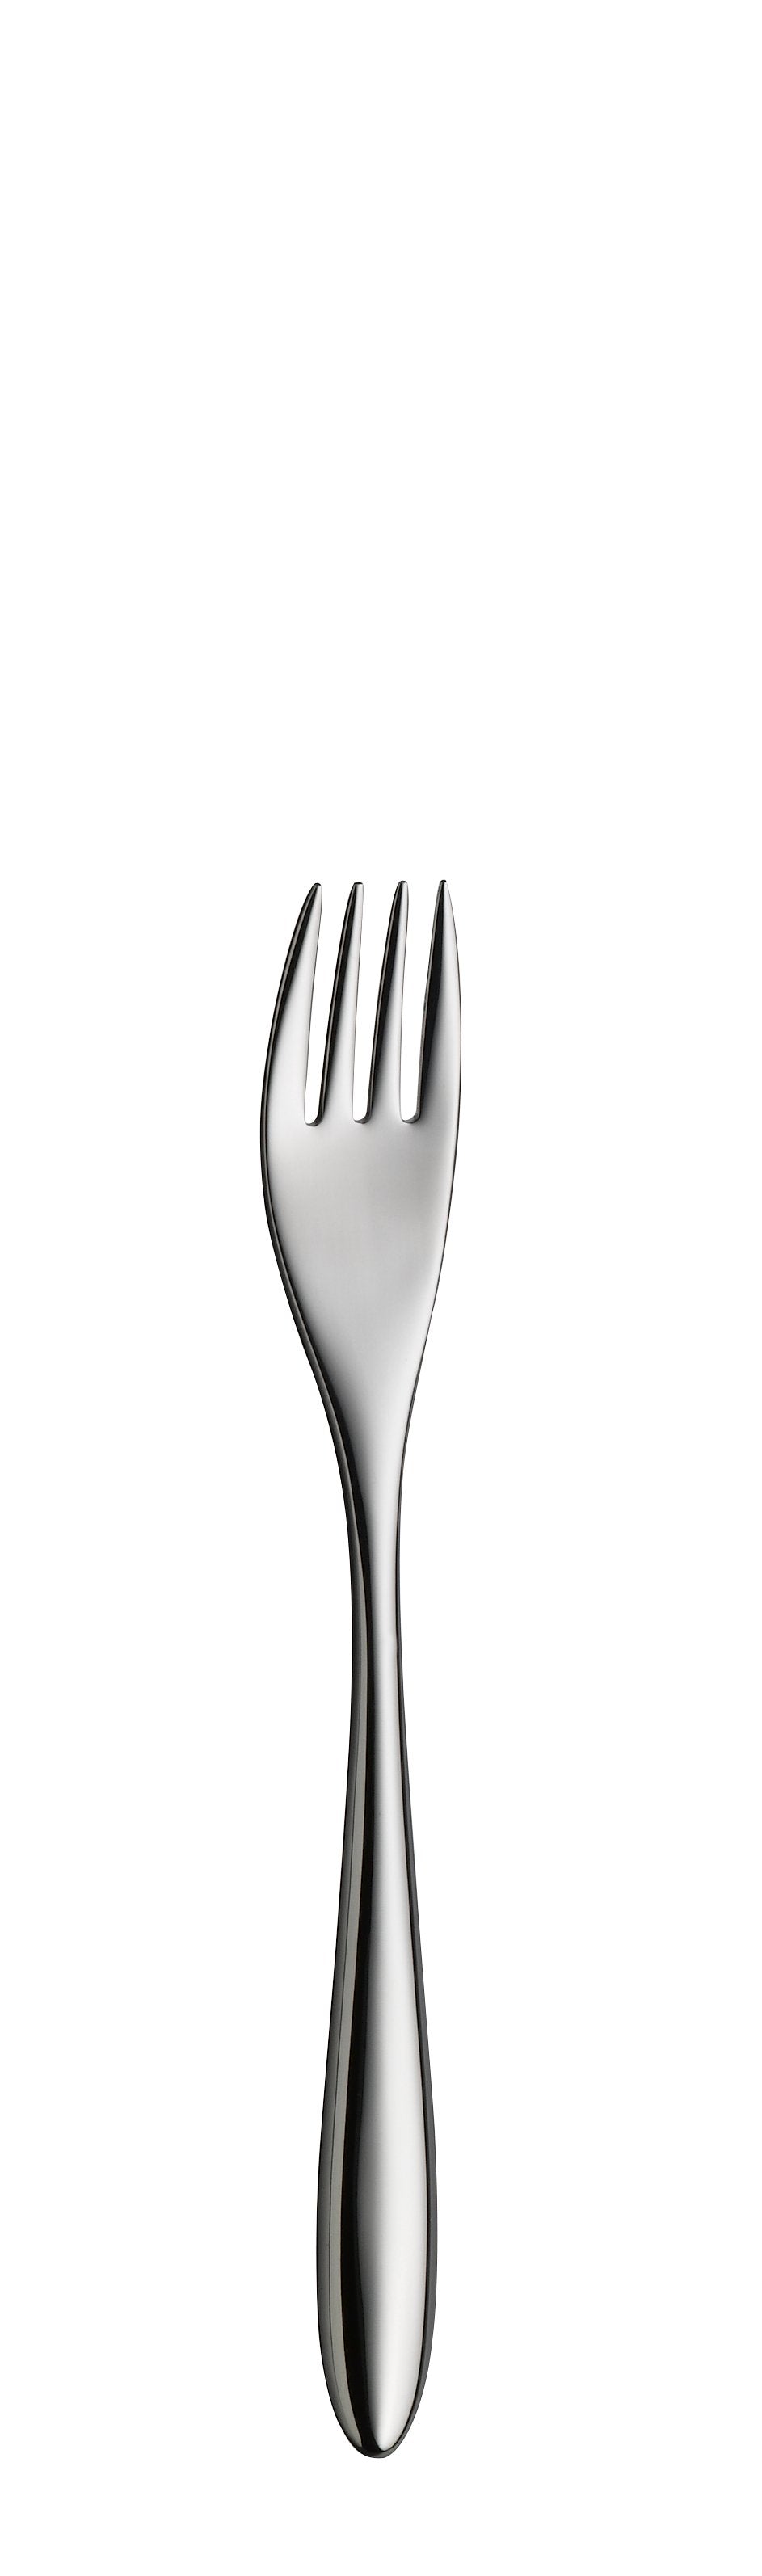 Dessert fork AVES silverplated 160mm